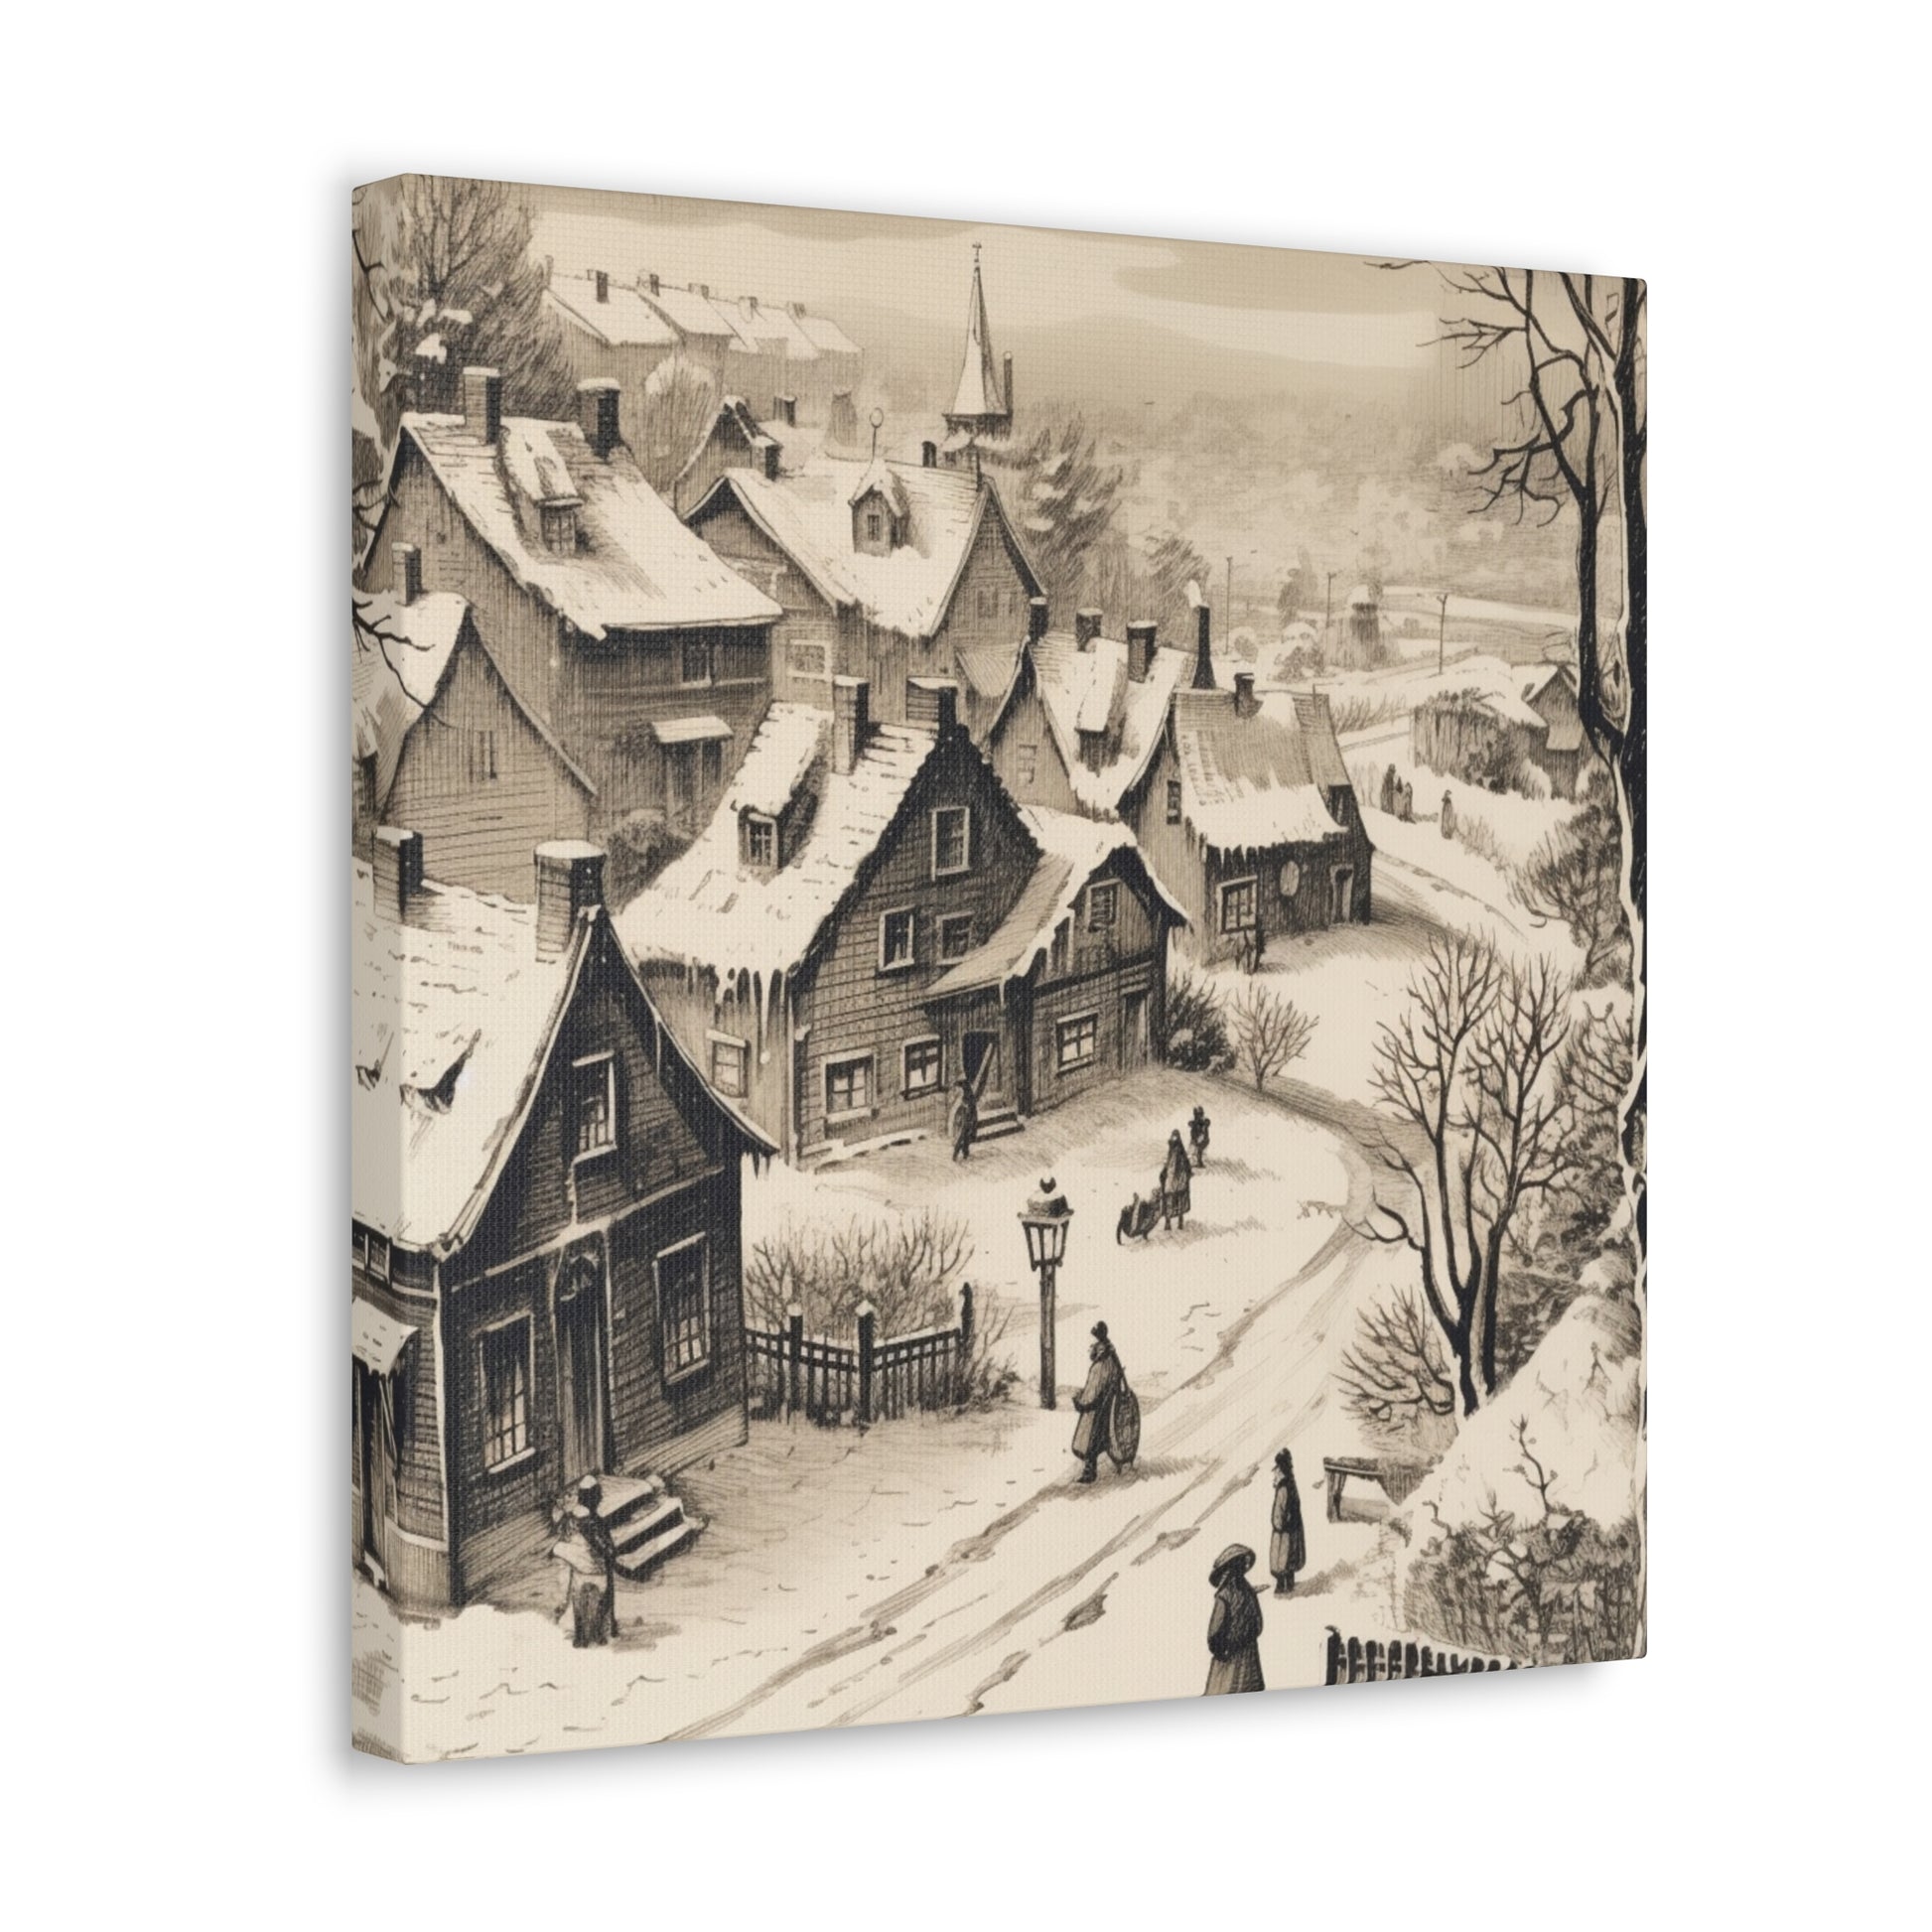 Detailed vintage winter village scene for elegant interiors